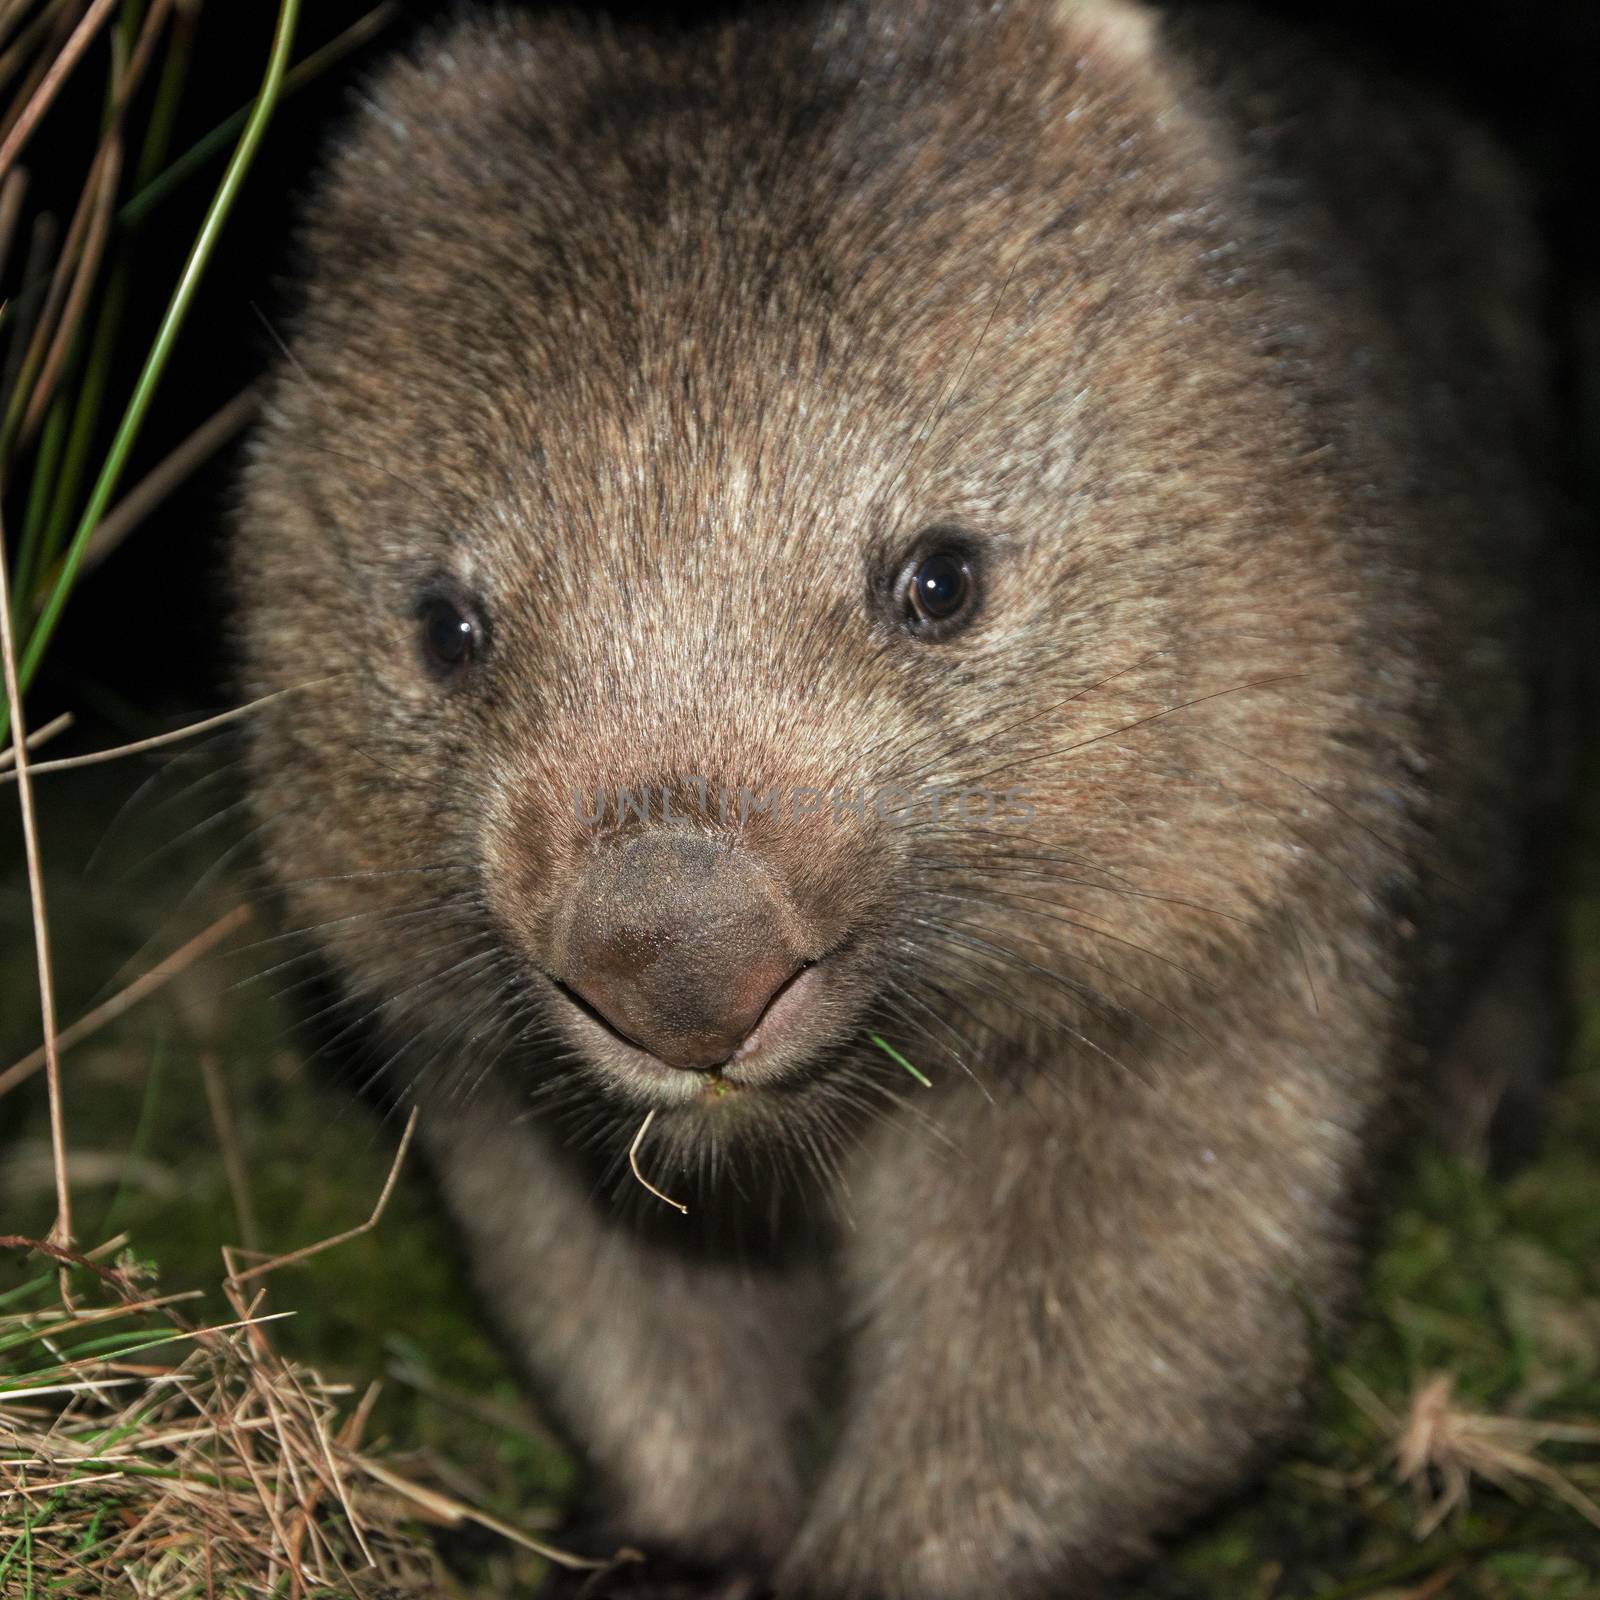 Wombat at night by artistrobd